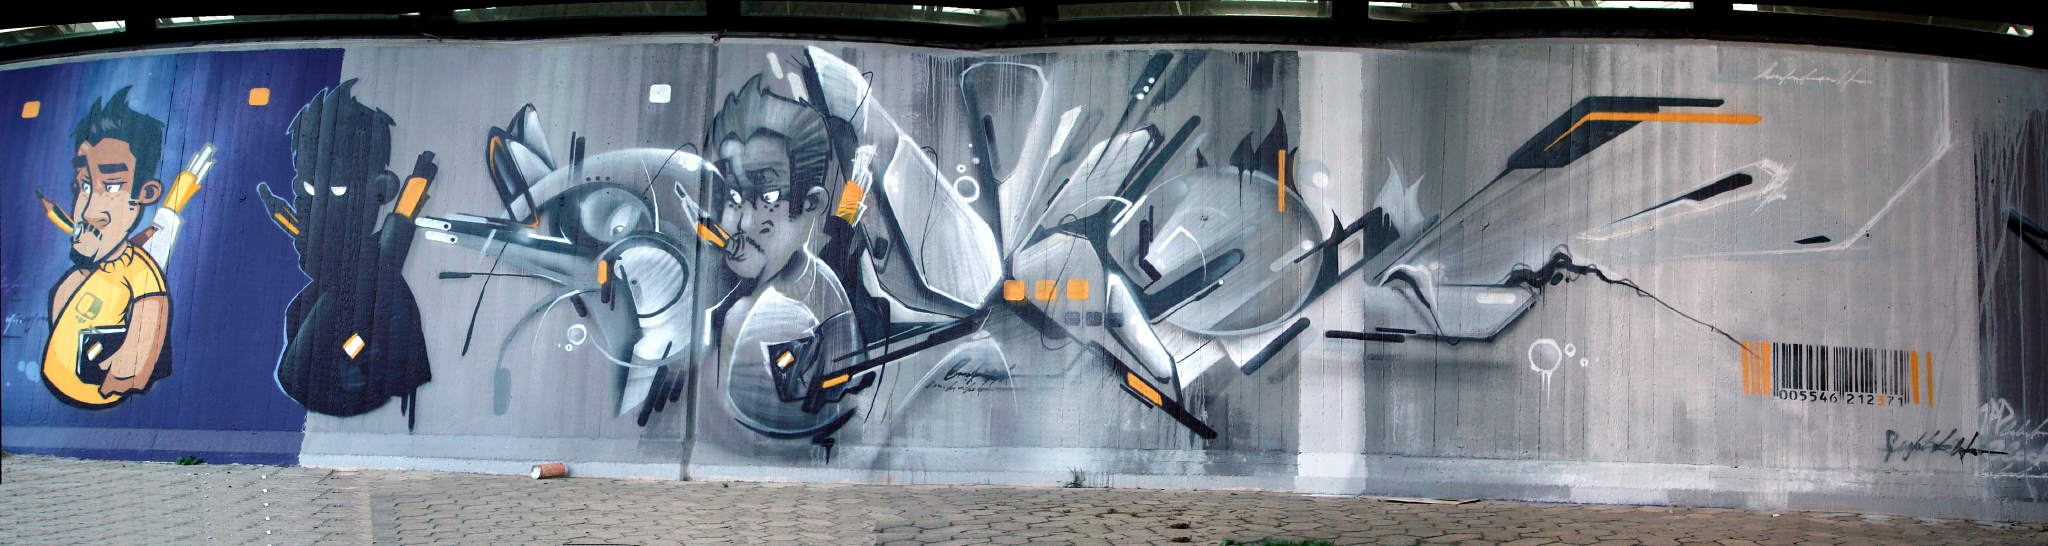 http://graffiti.org/clockwork/bond_ceon_hombre_eppingen_feb08.jpg